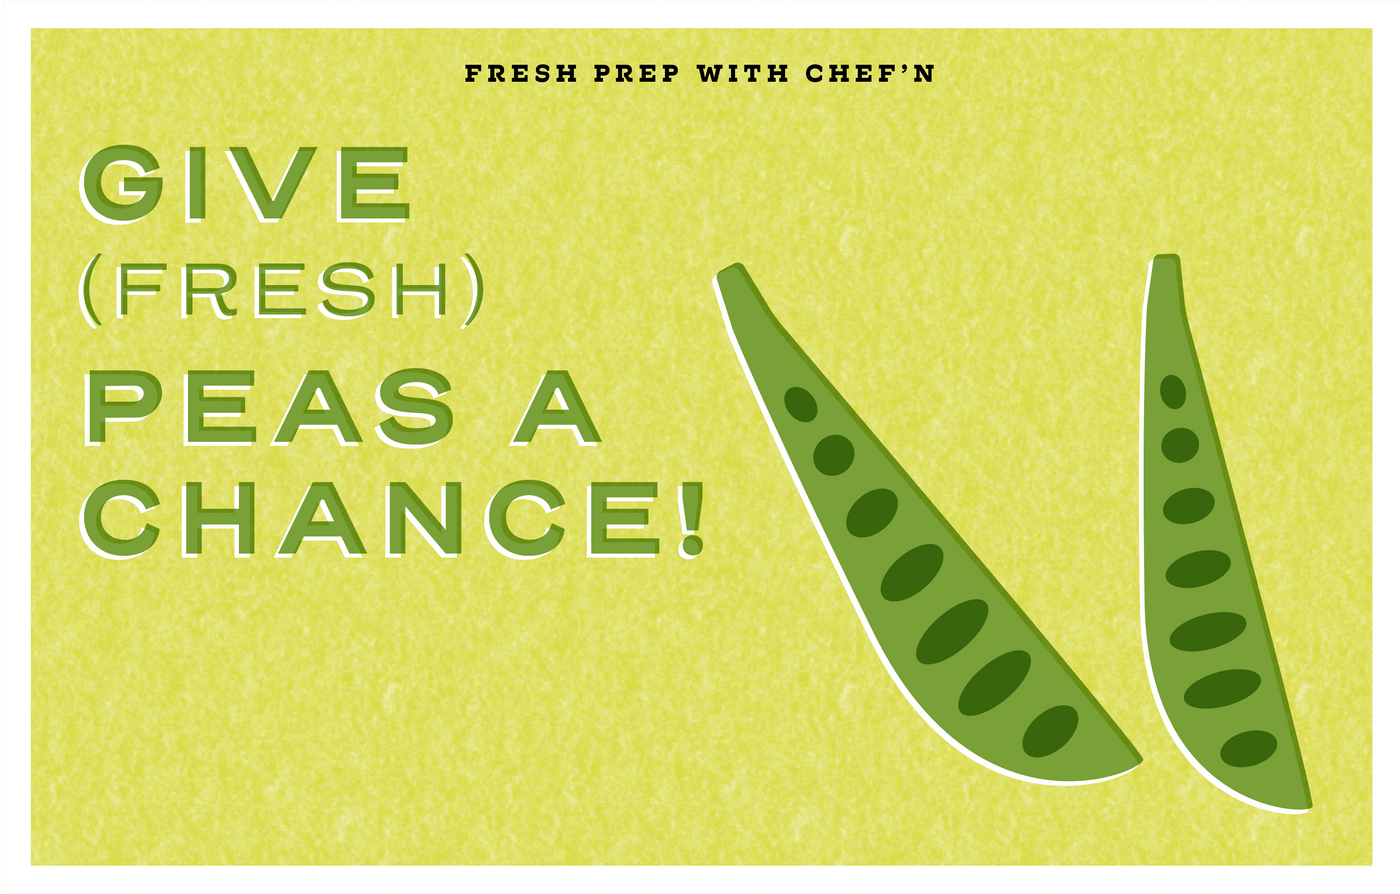 Give (fresh) Peas a Chance!